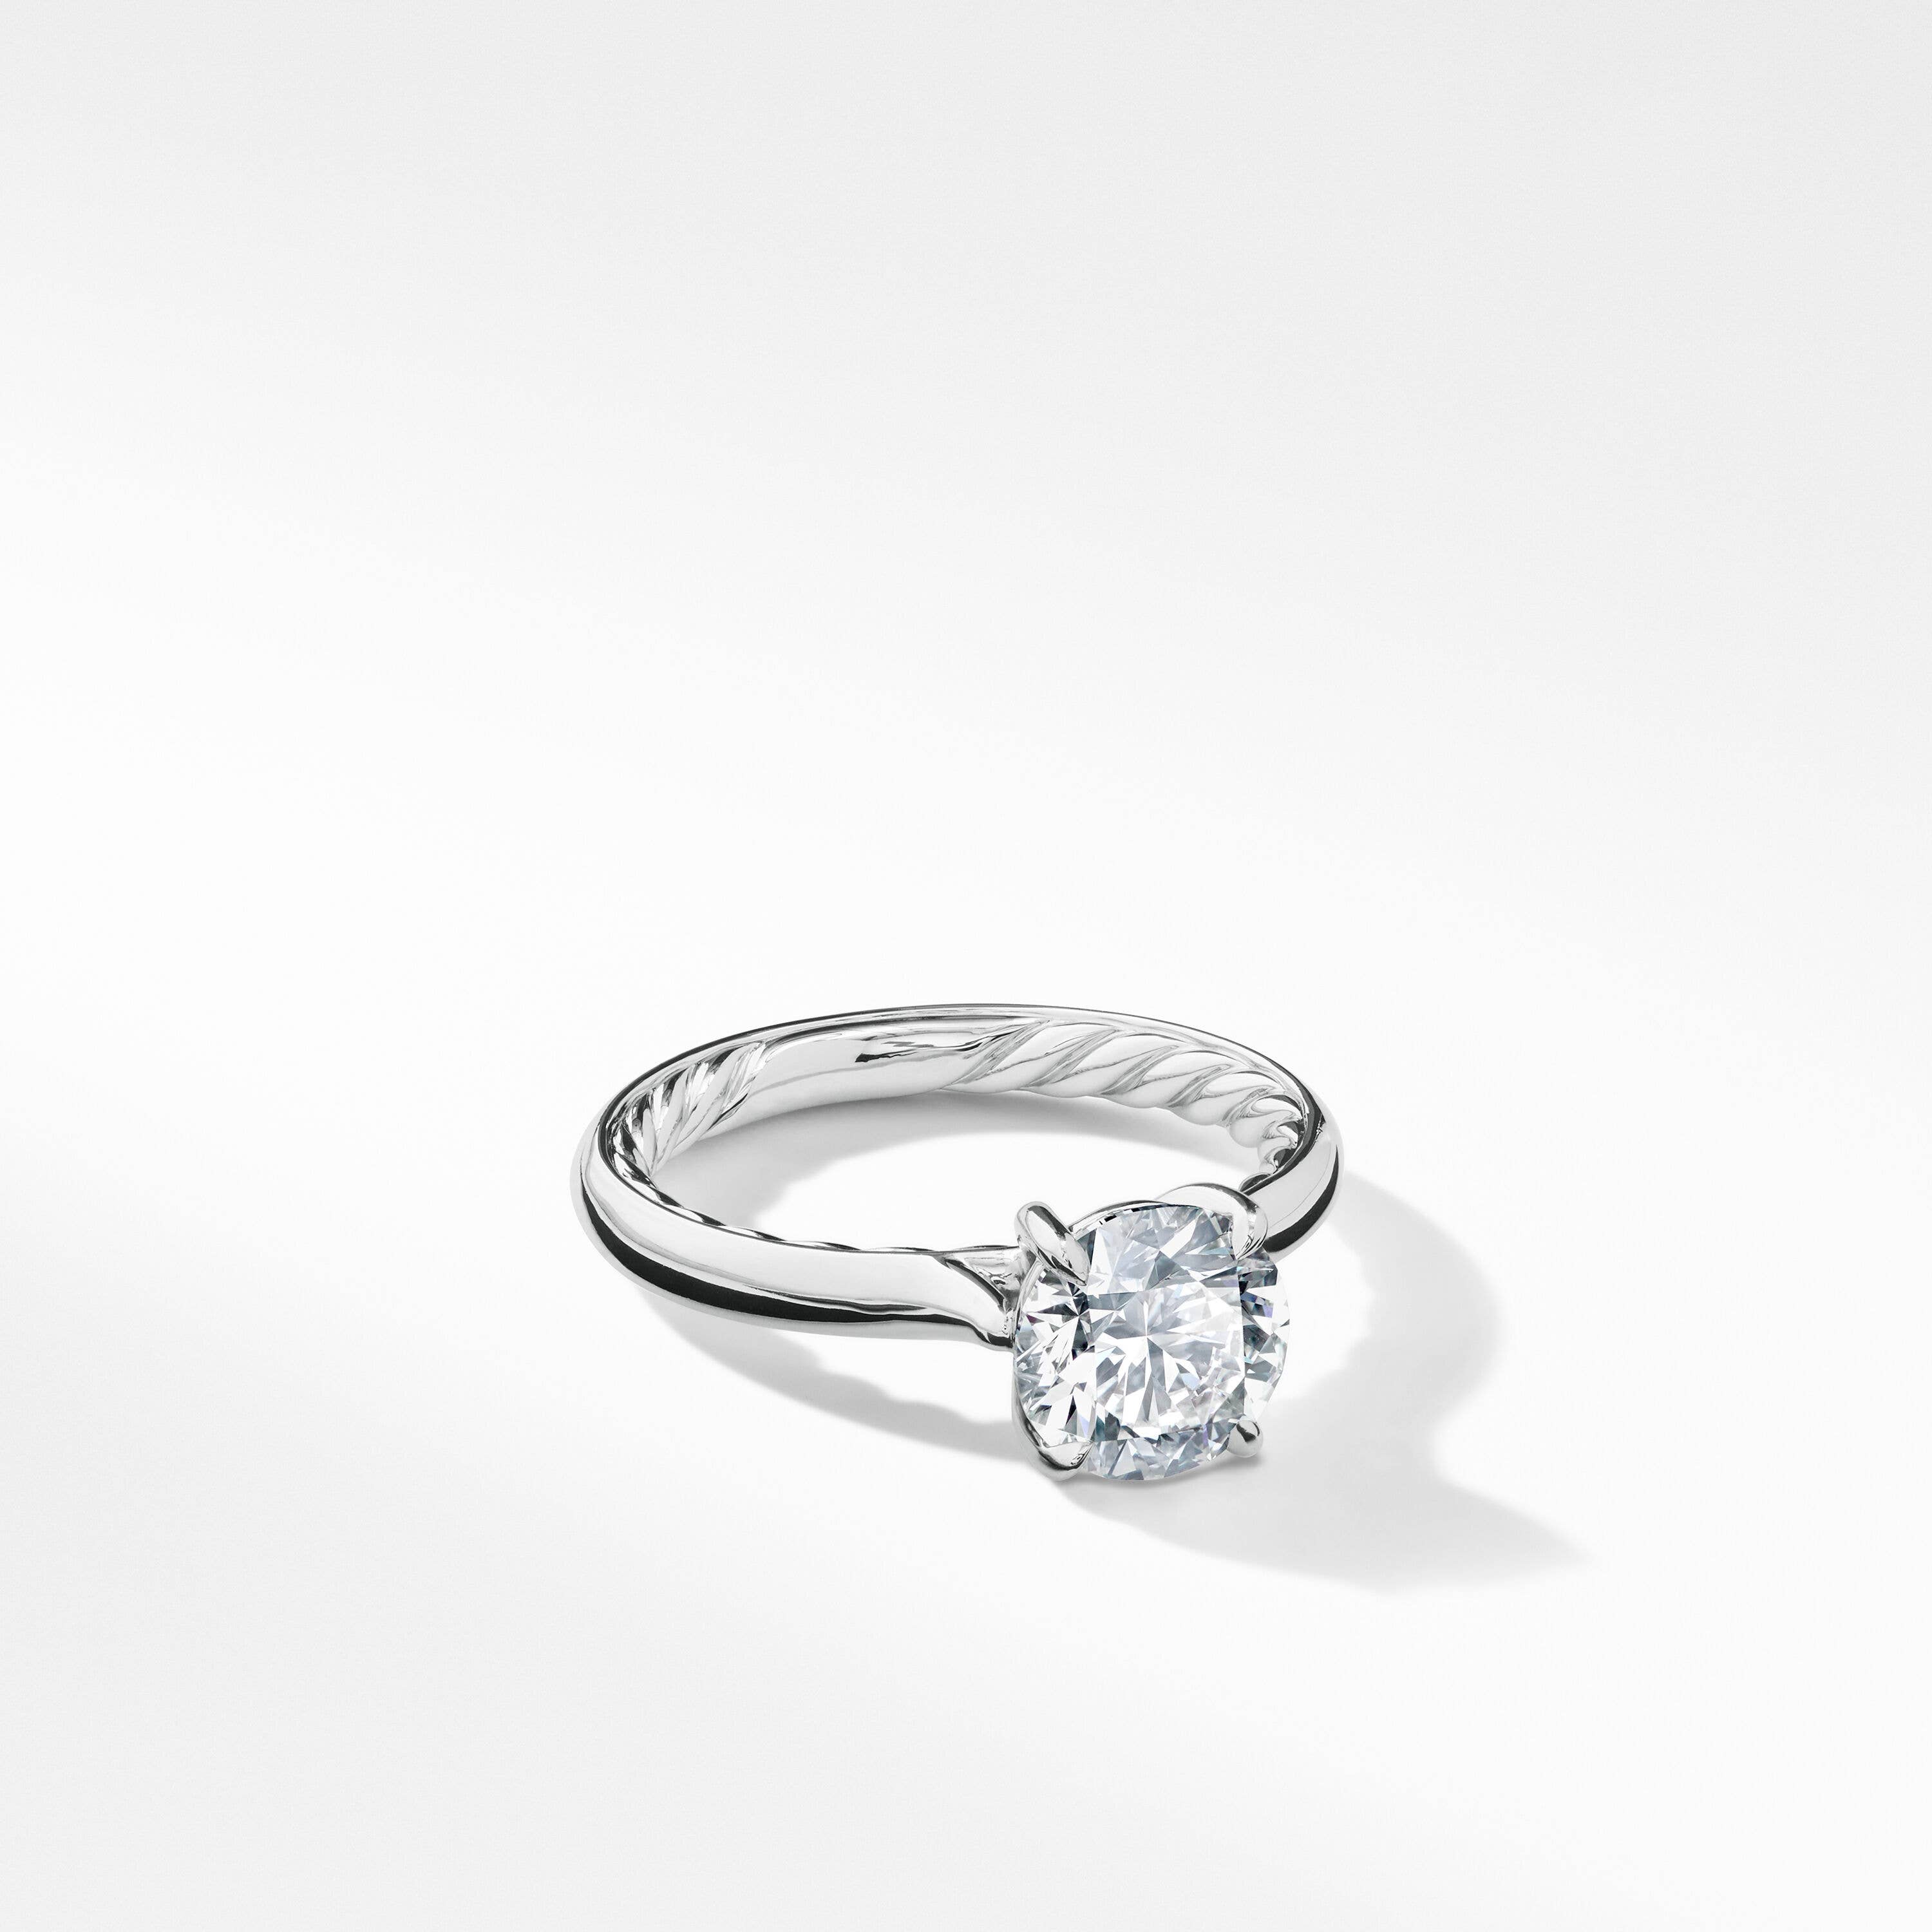 DY Eden Engagement Ring in Platinum, Round